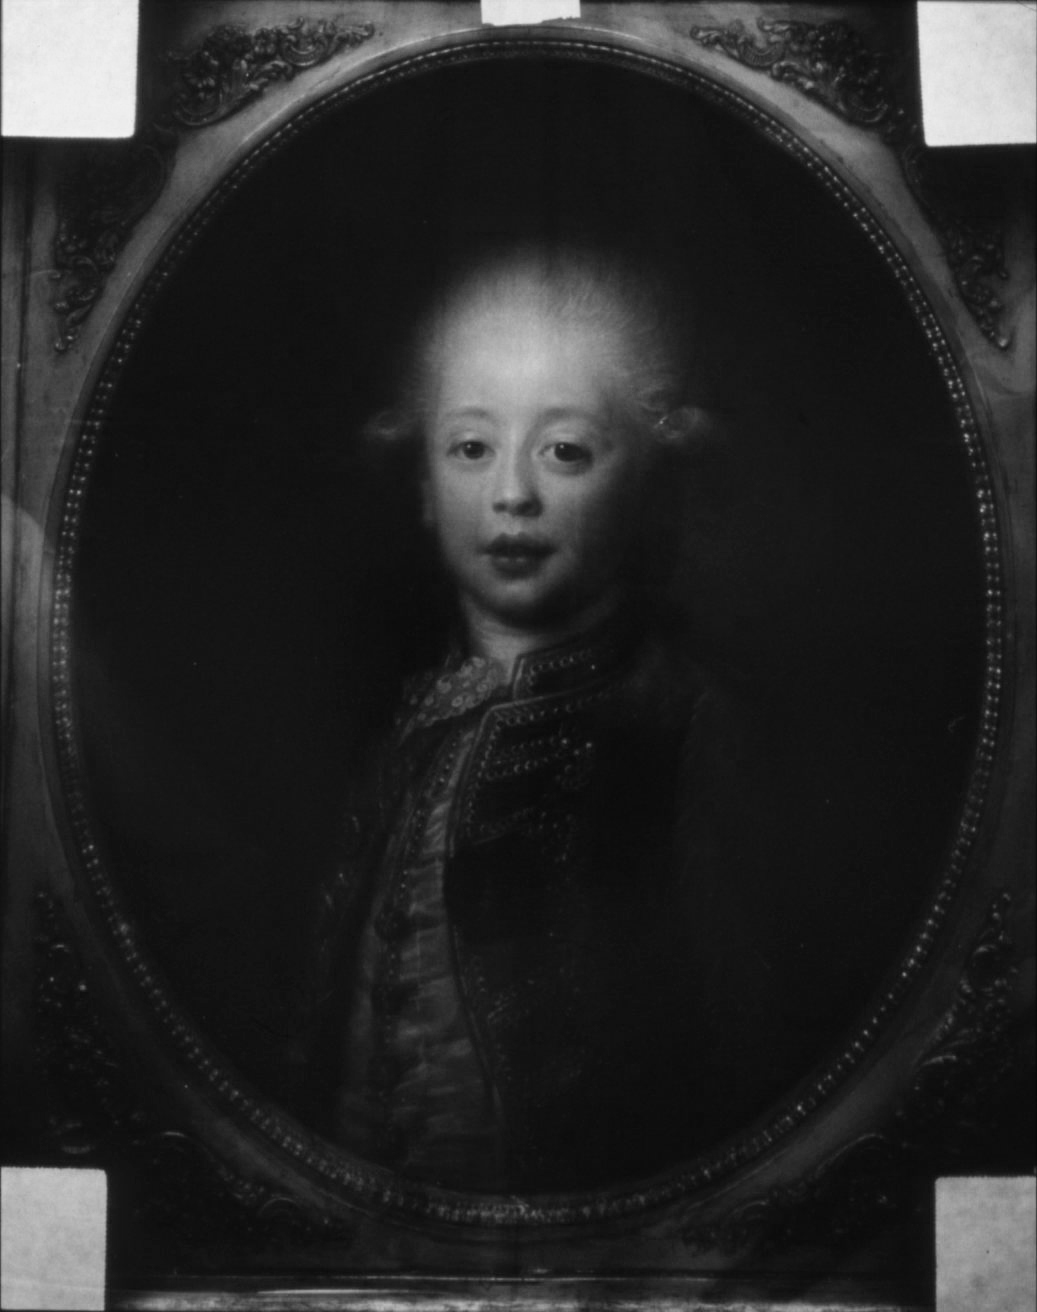  Portrait of a Boy, 1995 